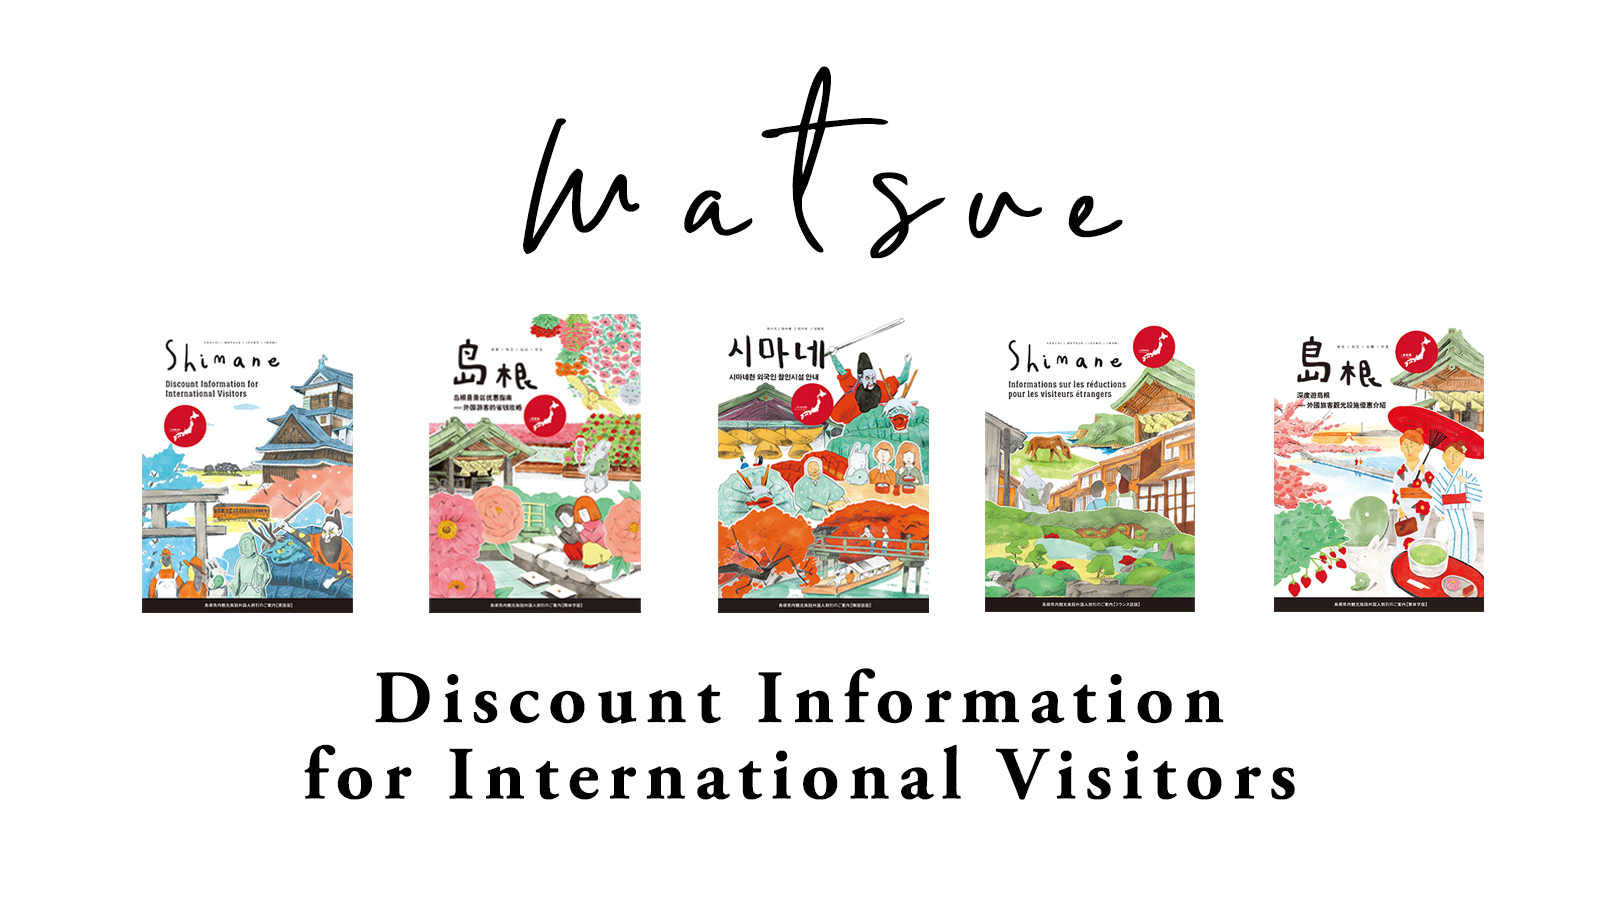 Shimane Discount Information Matsue